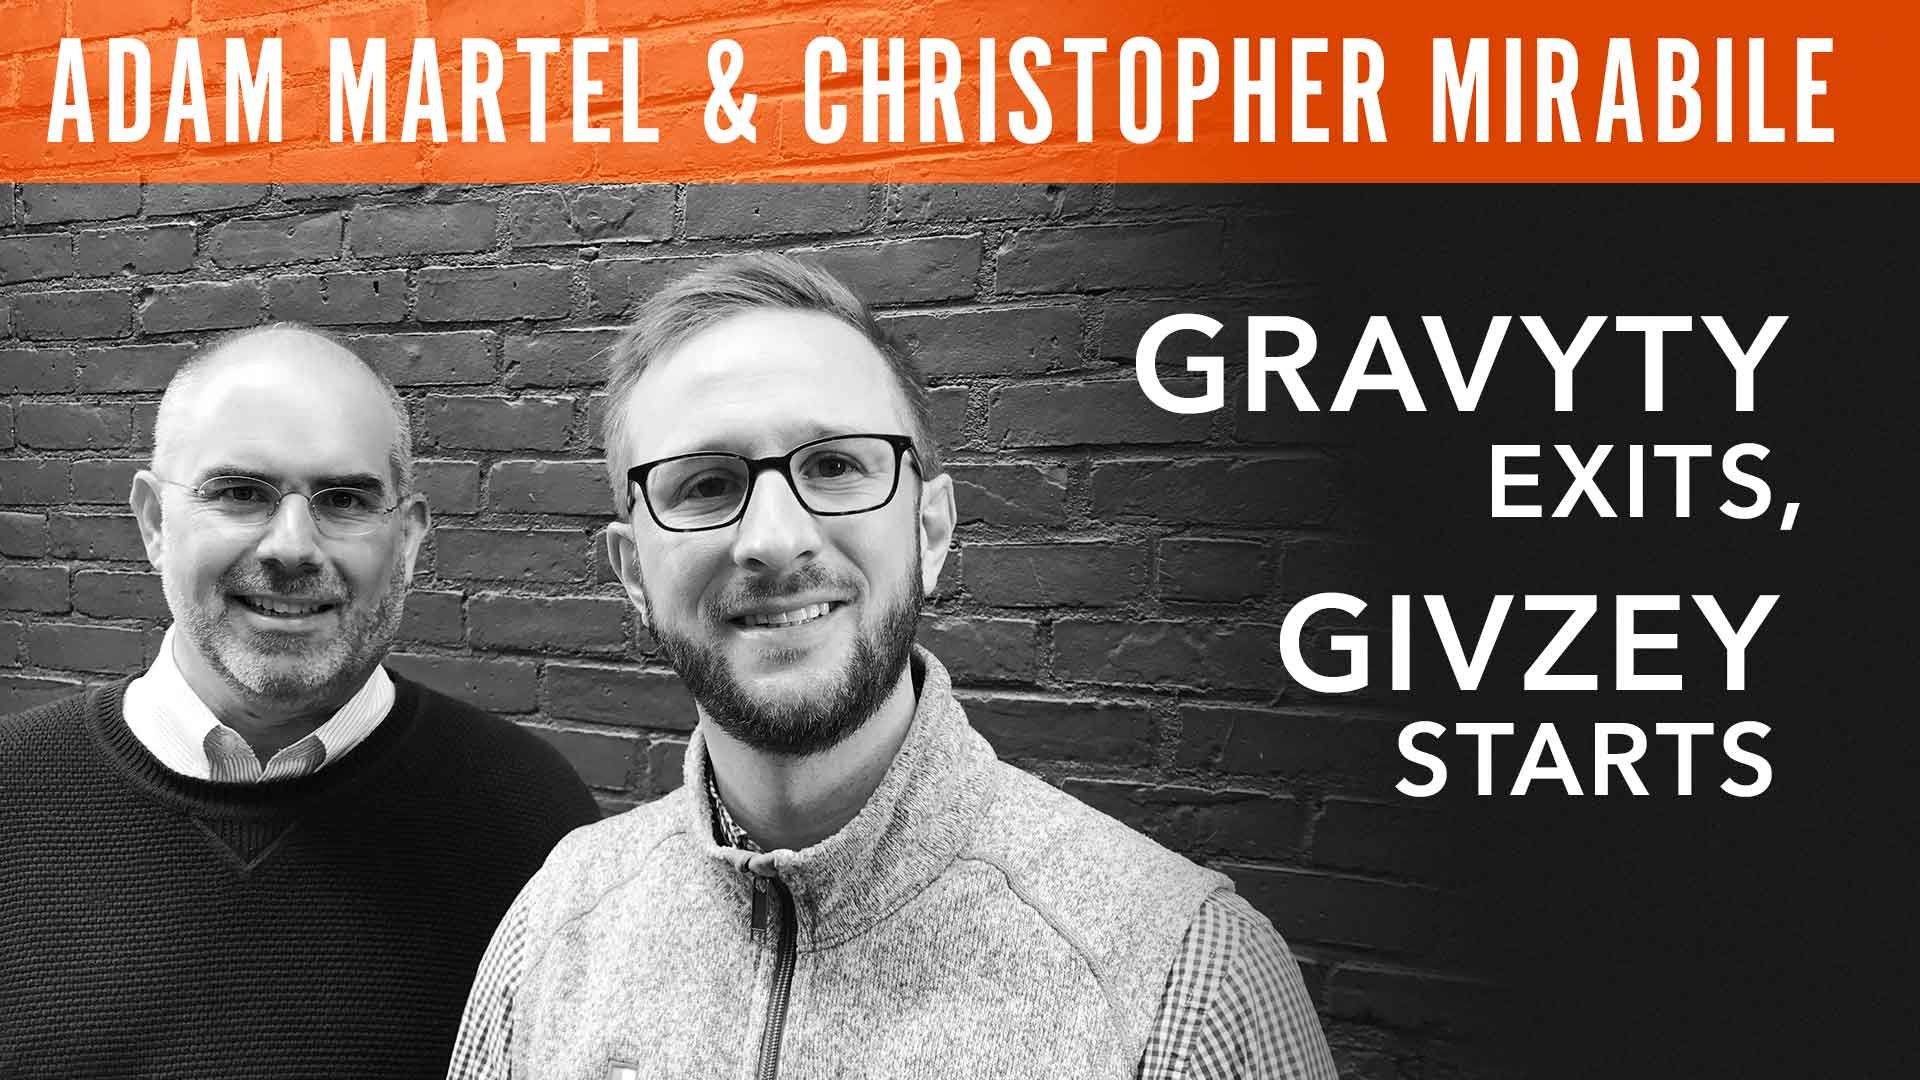 Adam Martel & Christopher Mirabile, "Gravyty Exits, Givzey Starts"